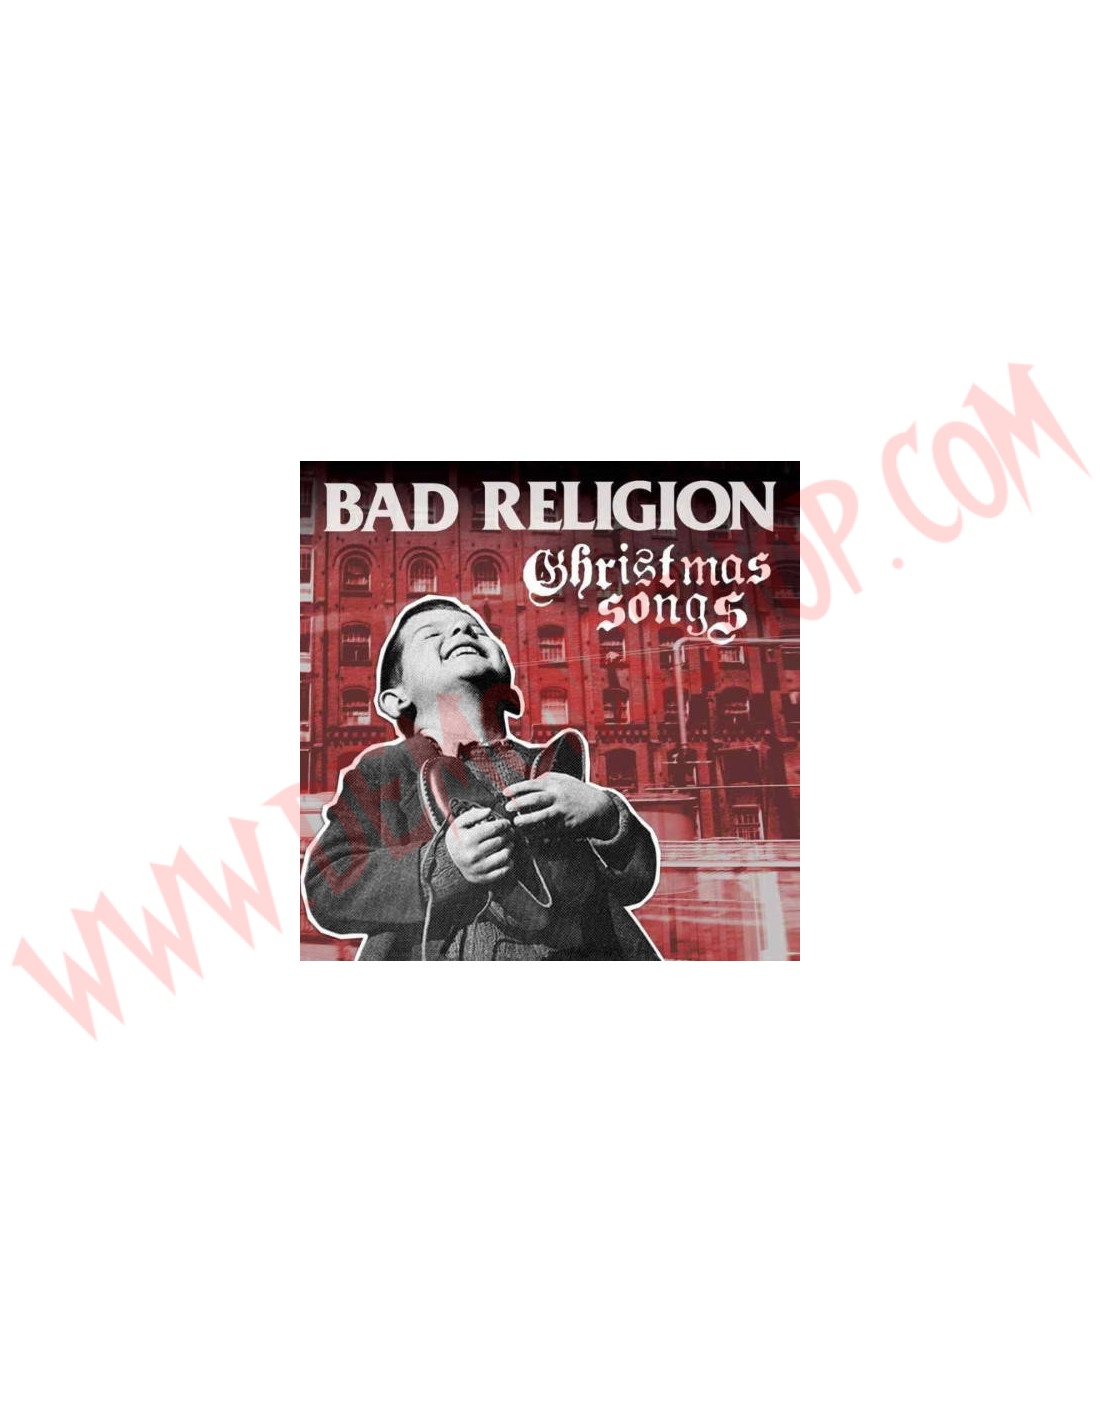 Vinilo LP Bad Religion - Christmas Songs - DEMONS SHOP